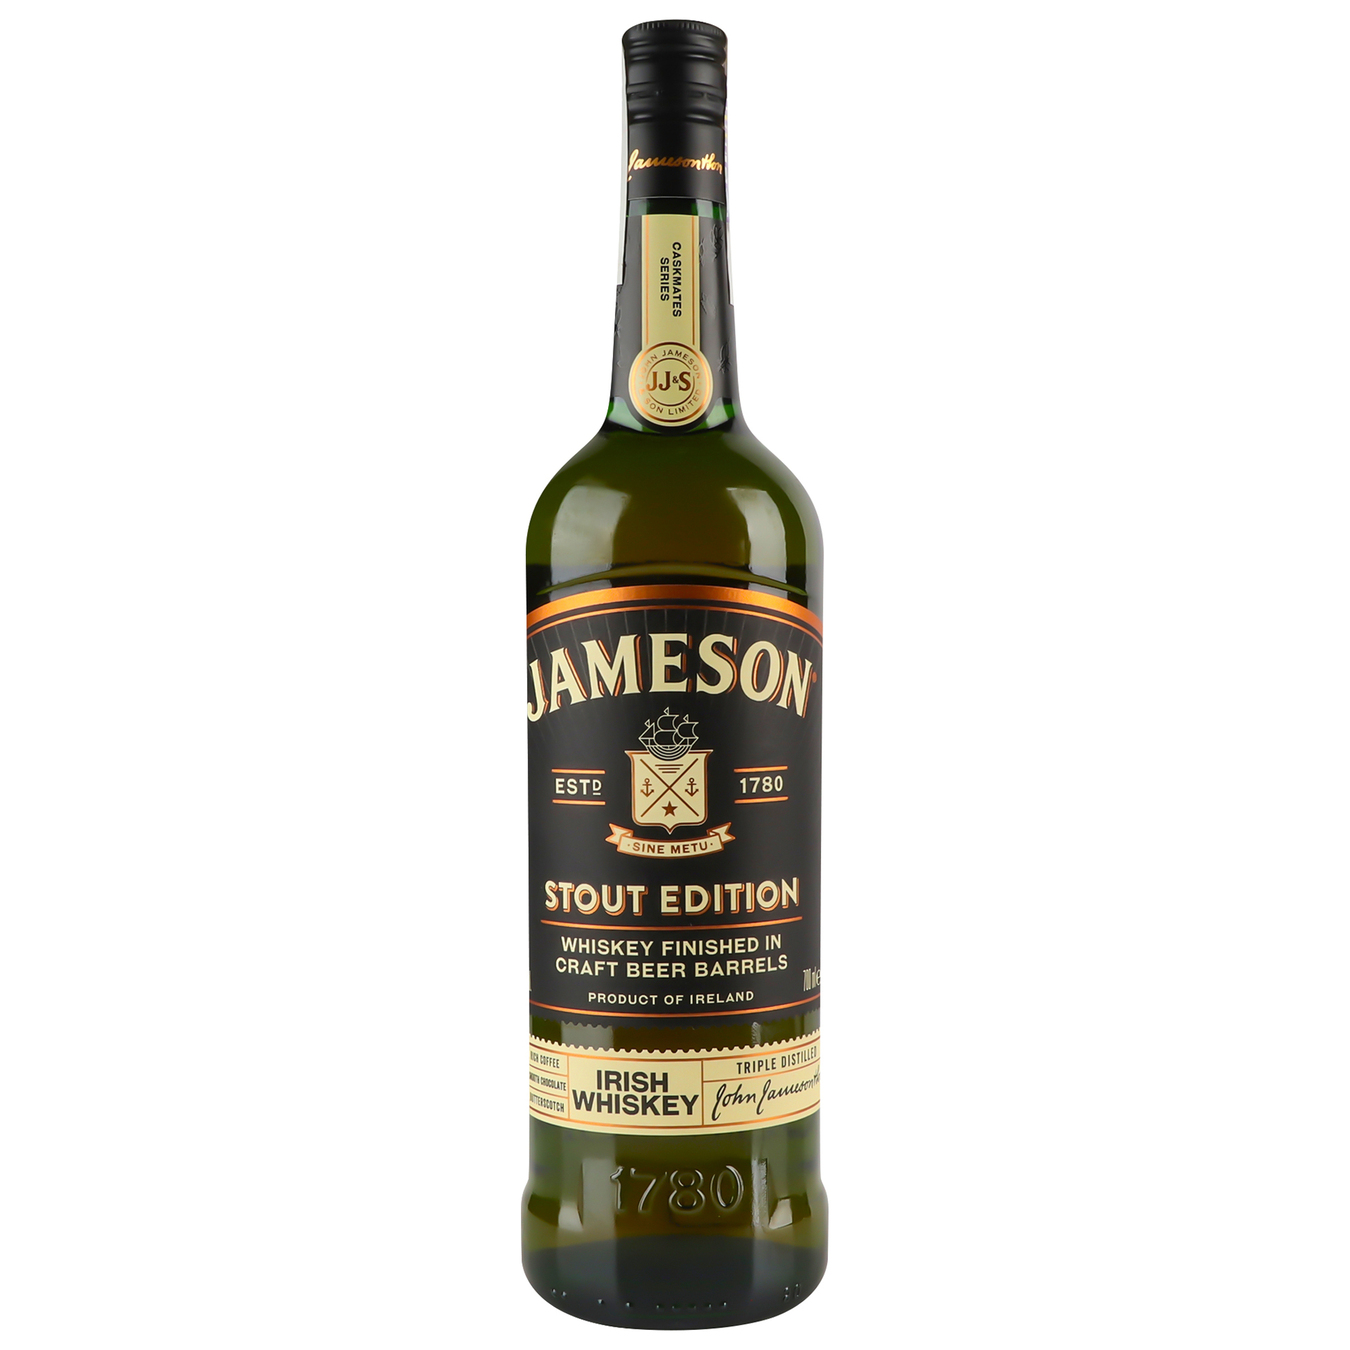 Jameson Caskmates Whiskey 700ml